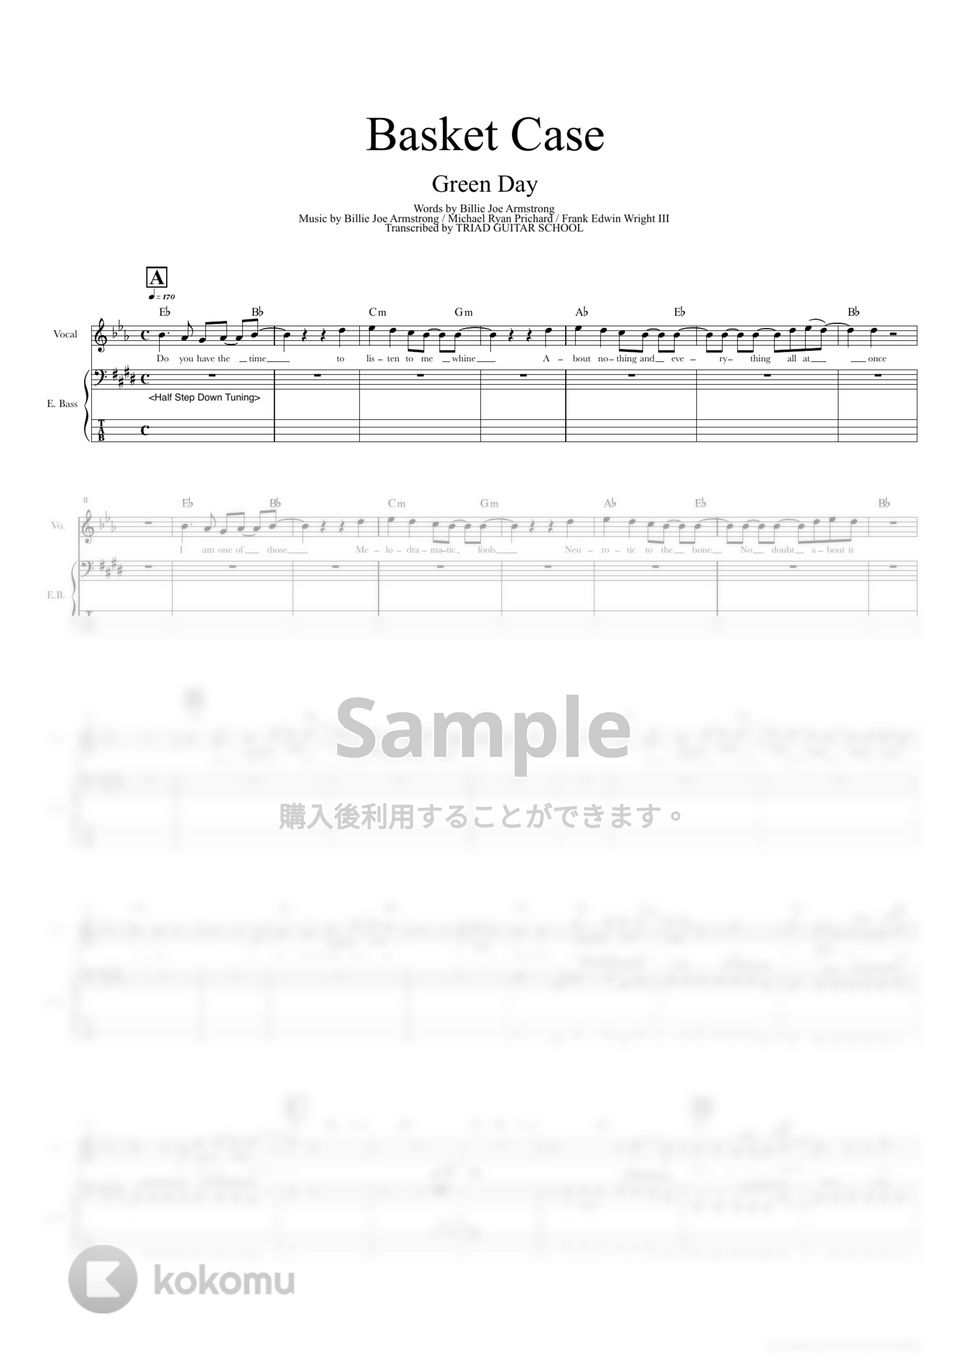 GREEN DAY - Basket Case (ベーススコア・歌詞・コード付き) by TRIAD GUITAR SCHOOL